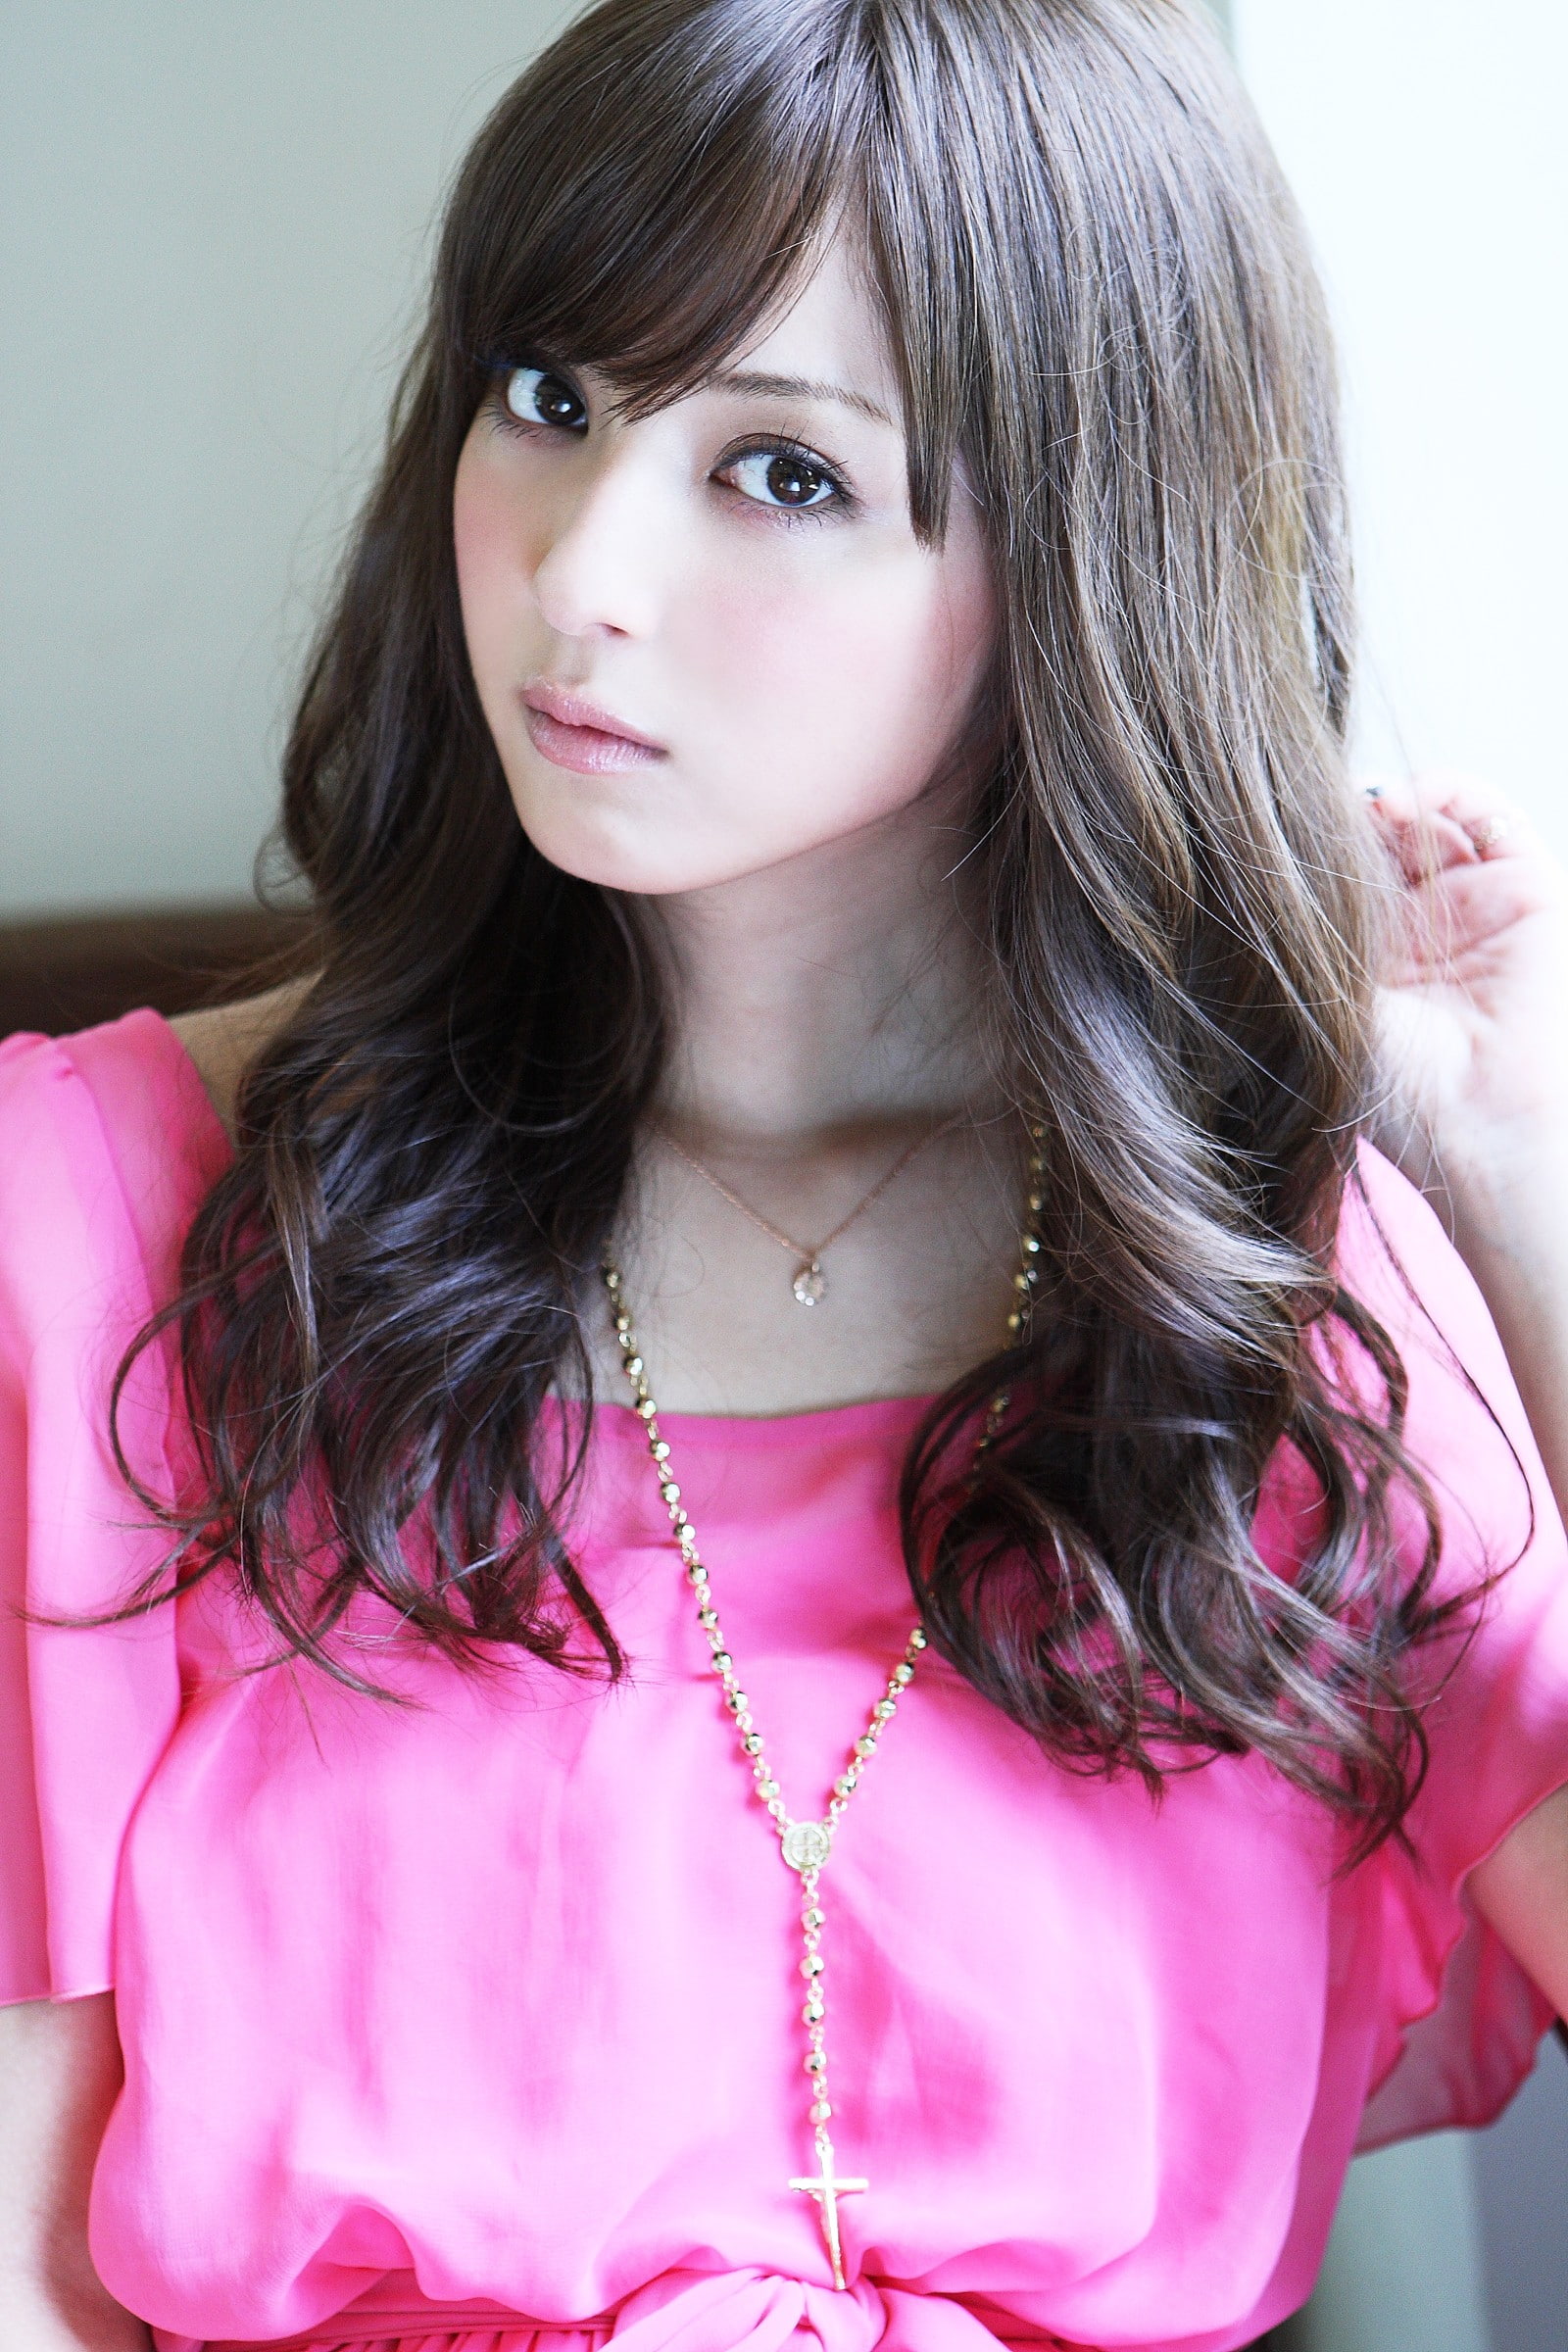 Sasaki Nozomi, model, Asian, Japanese, necklace, looking at viewer